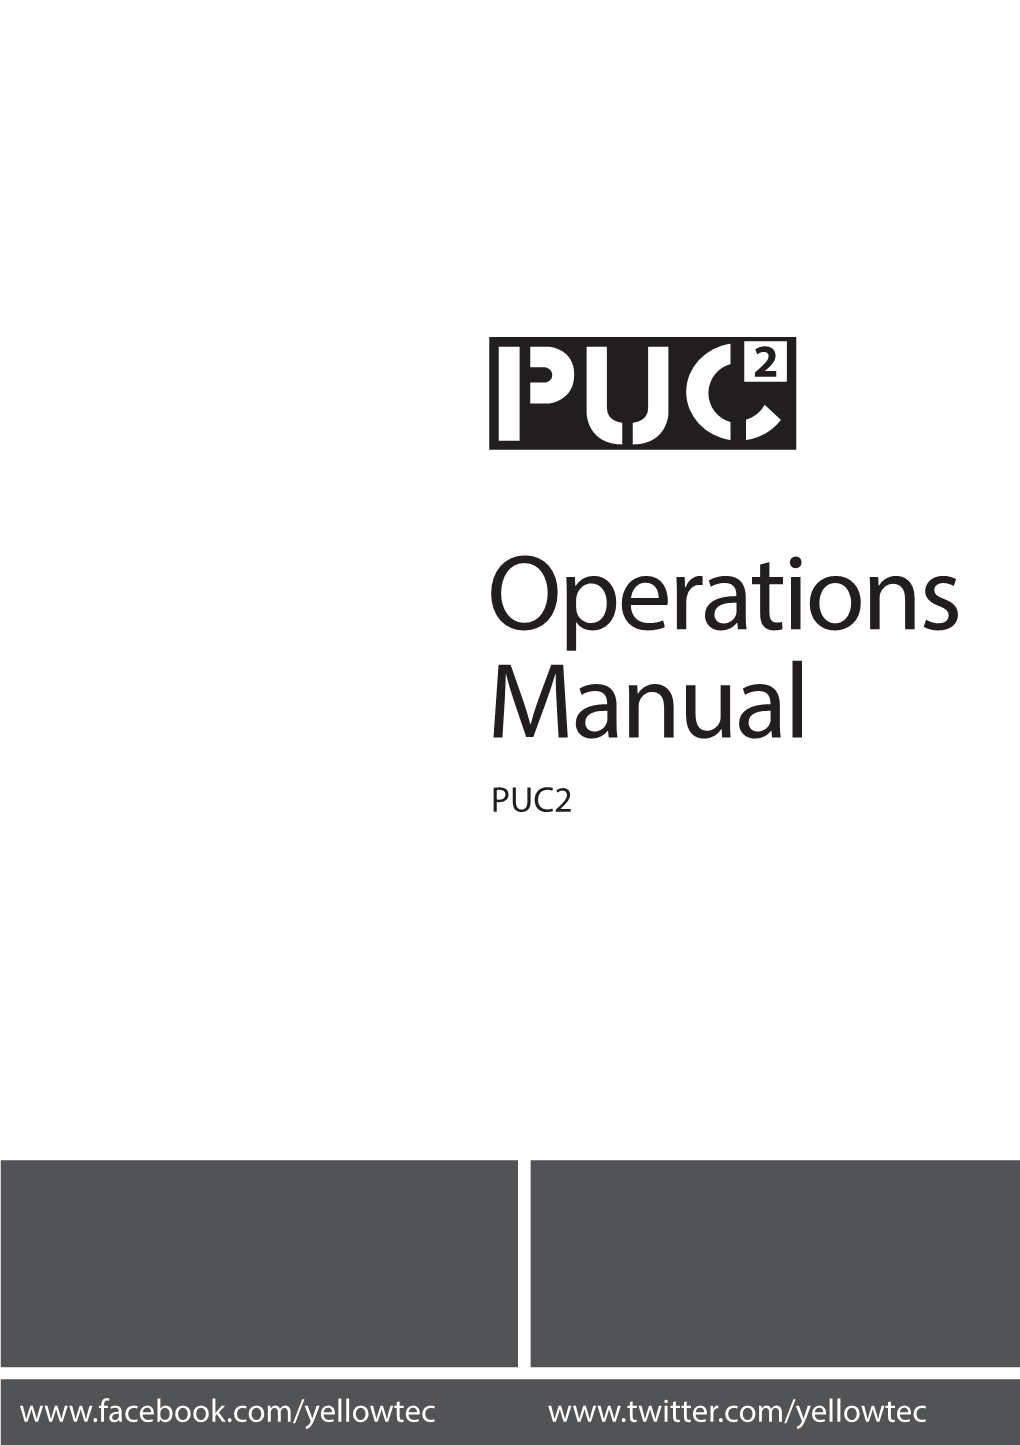 Manual Operations